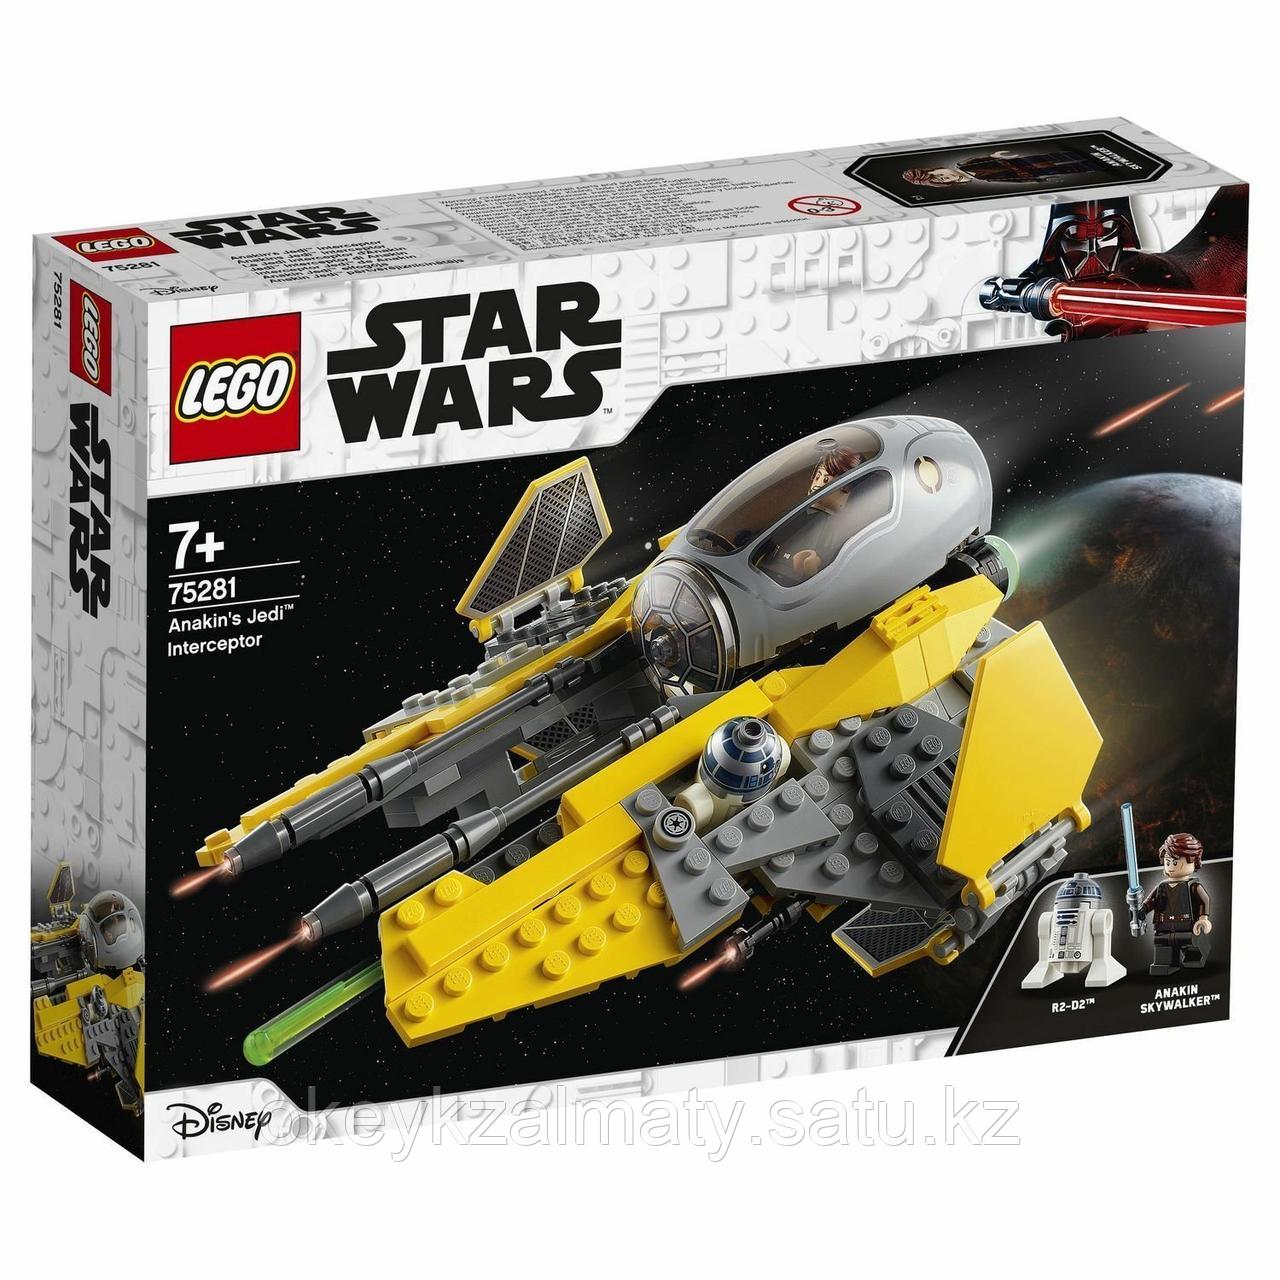 LEGO Star Wars: Джедайский перехватчик Энакина 75281